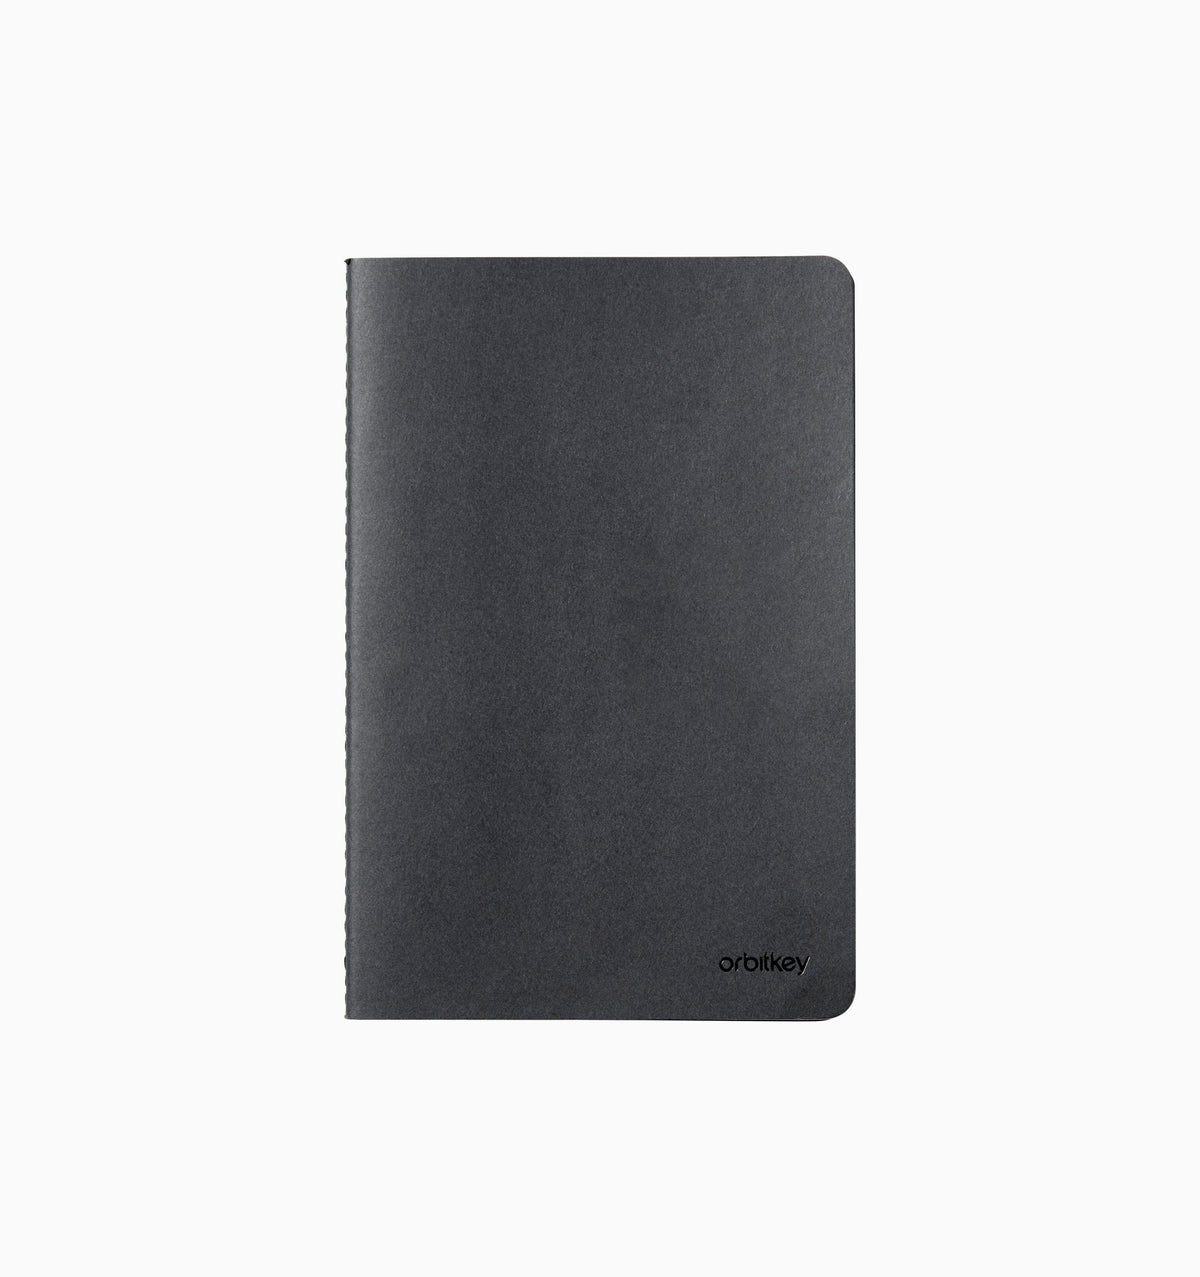 Orbitkey A5 Notebook - 3 Packs - Black